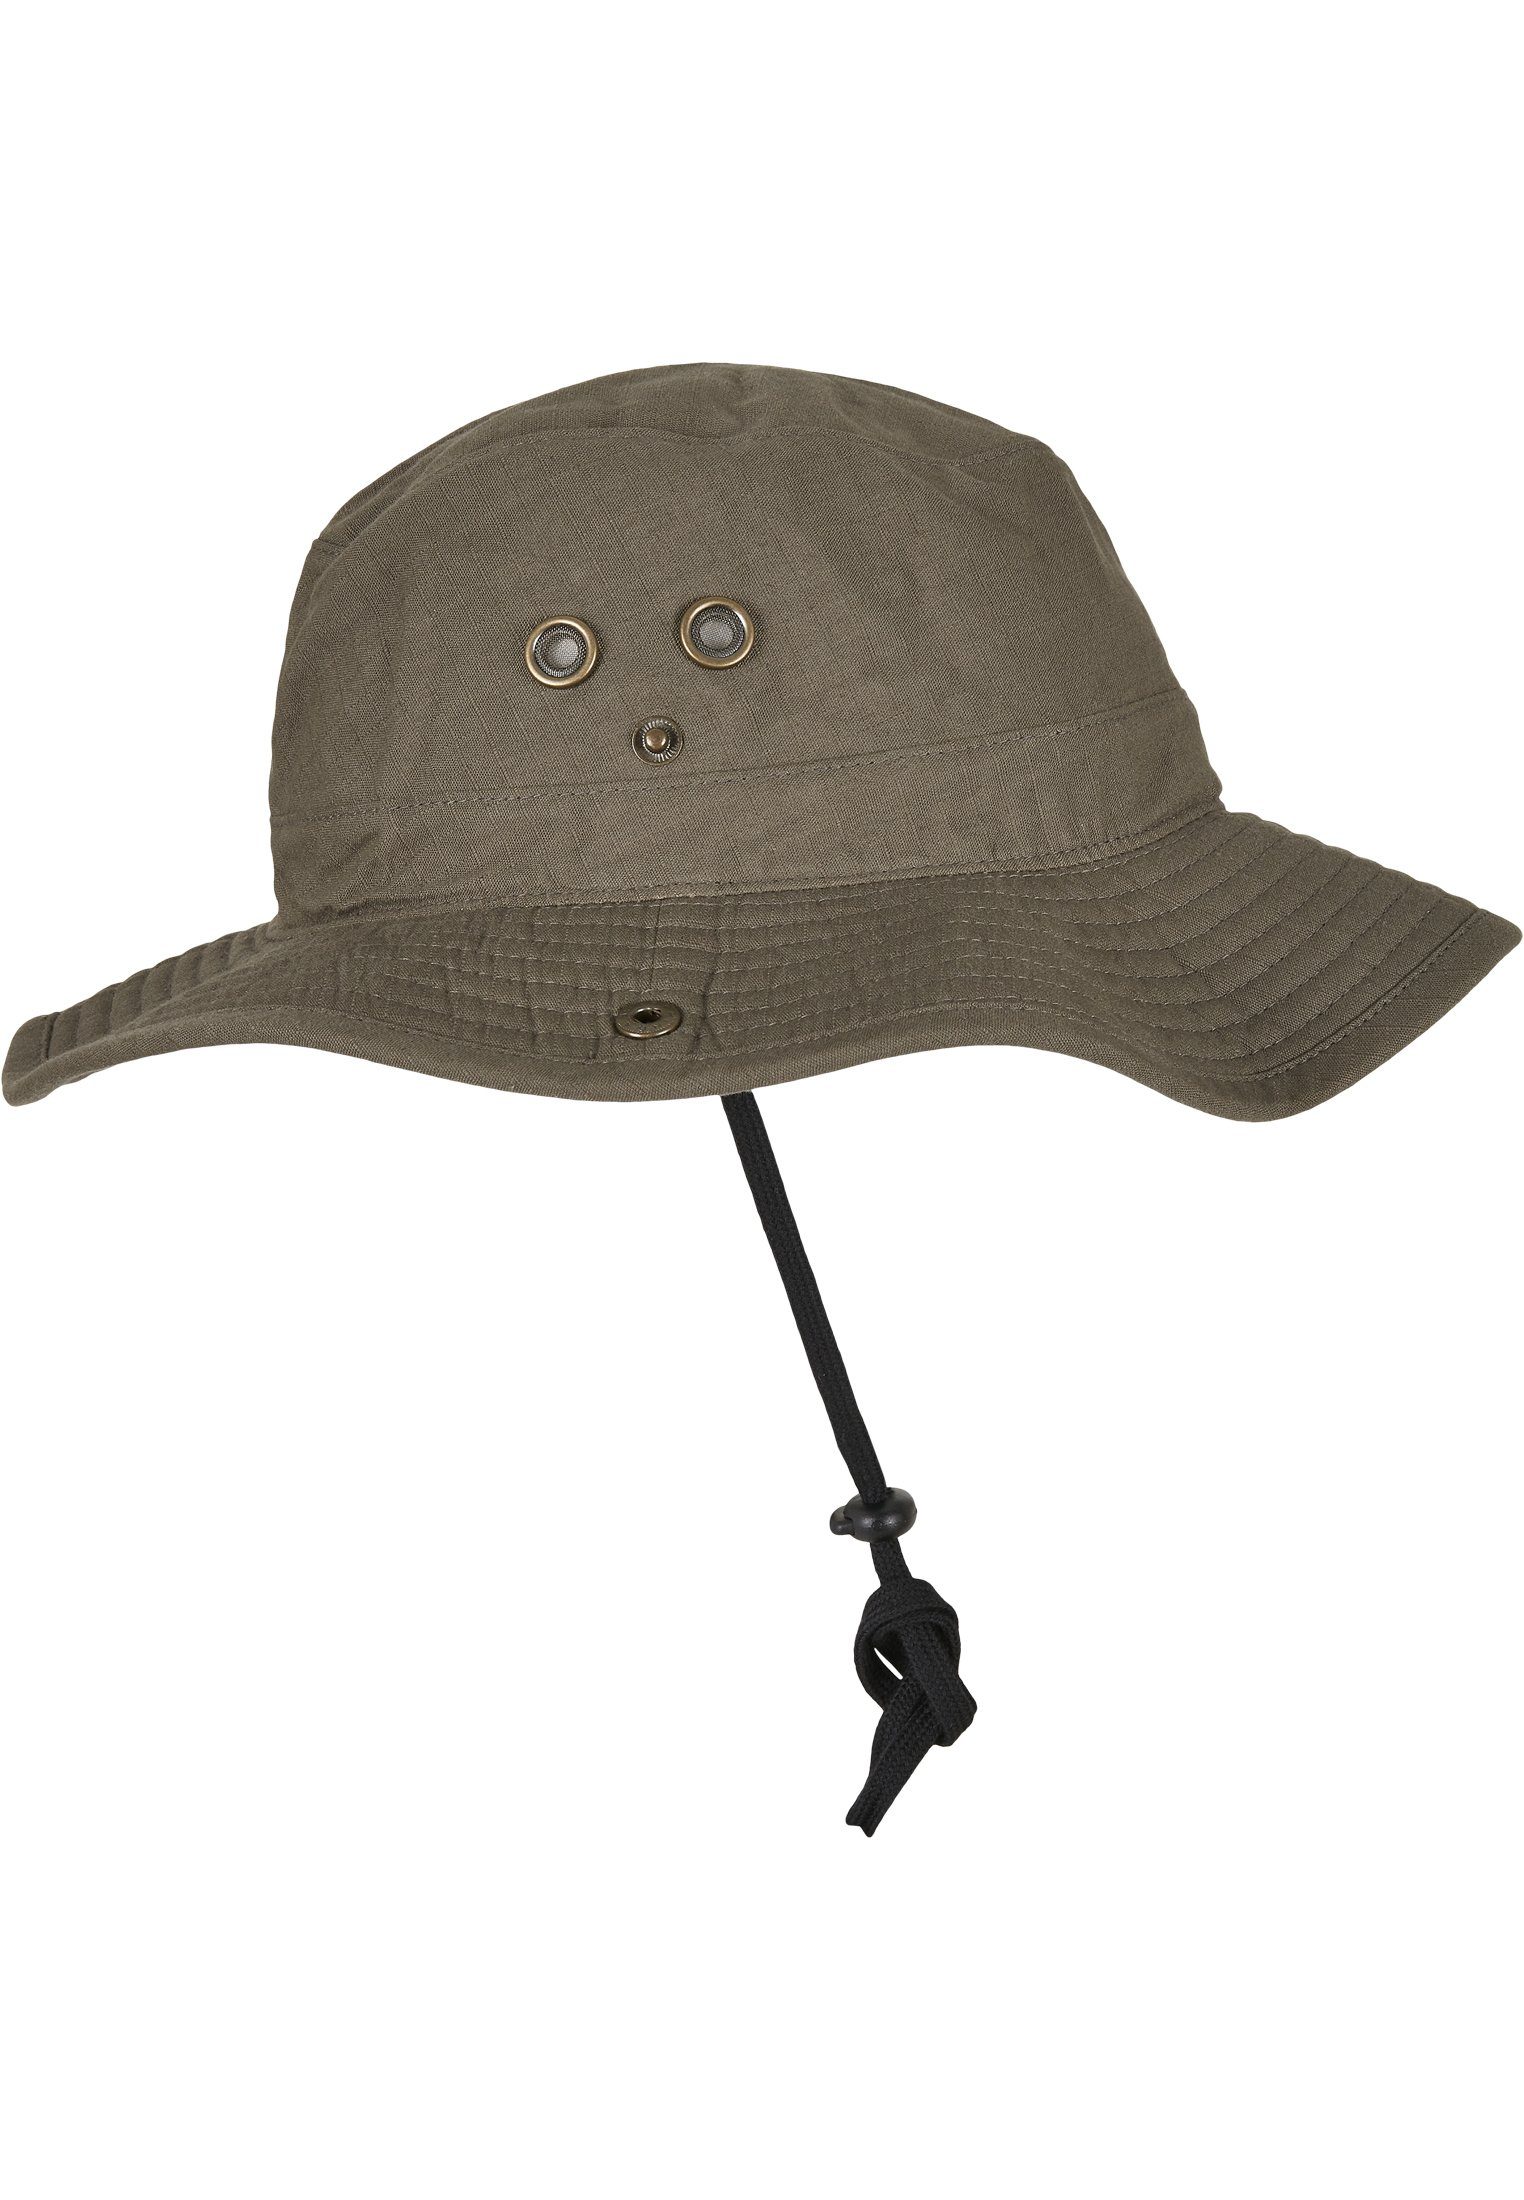 Flexfit Flex Hat darkolive Angler Cap